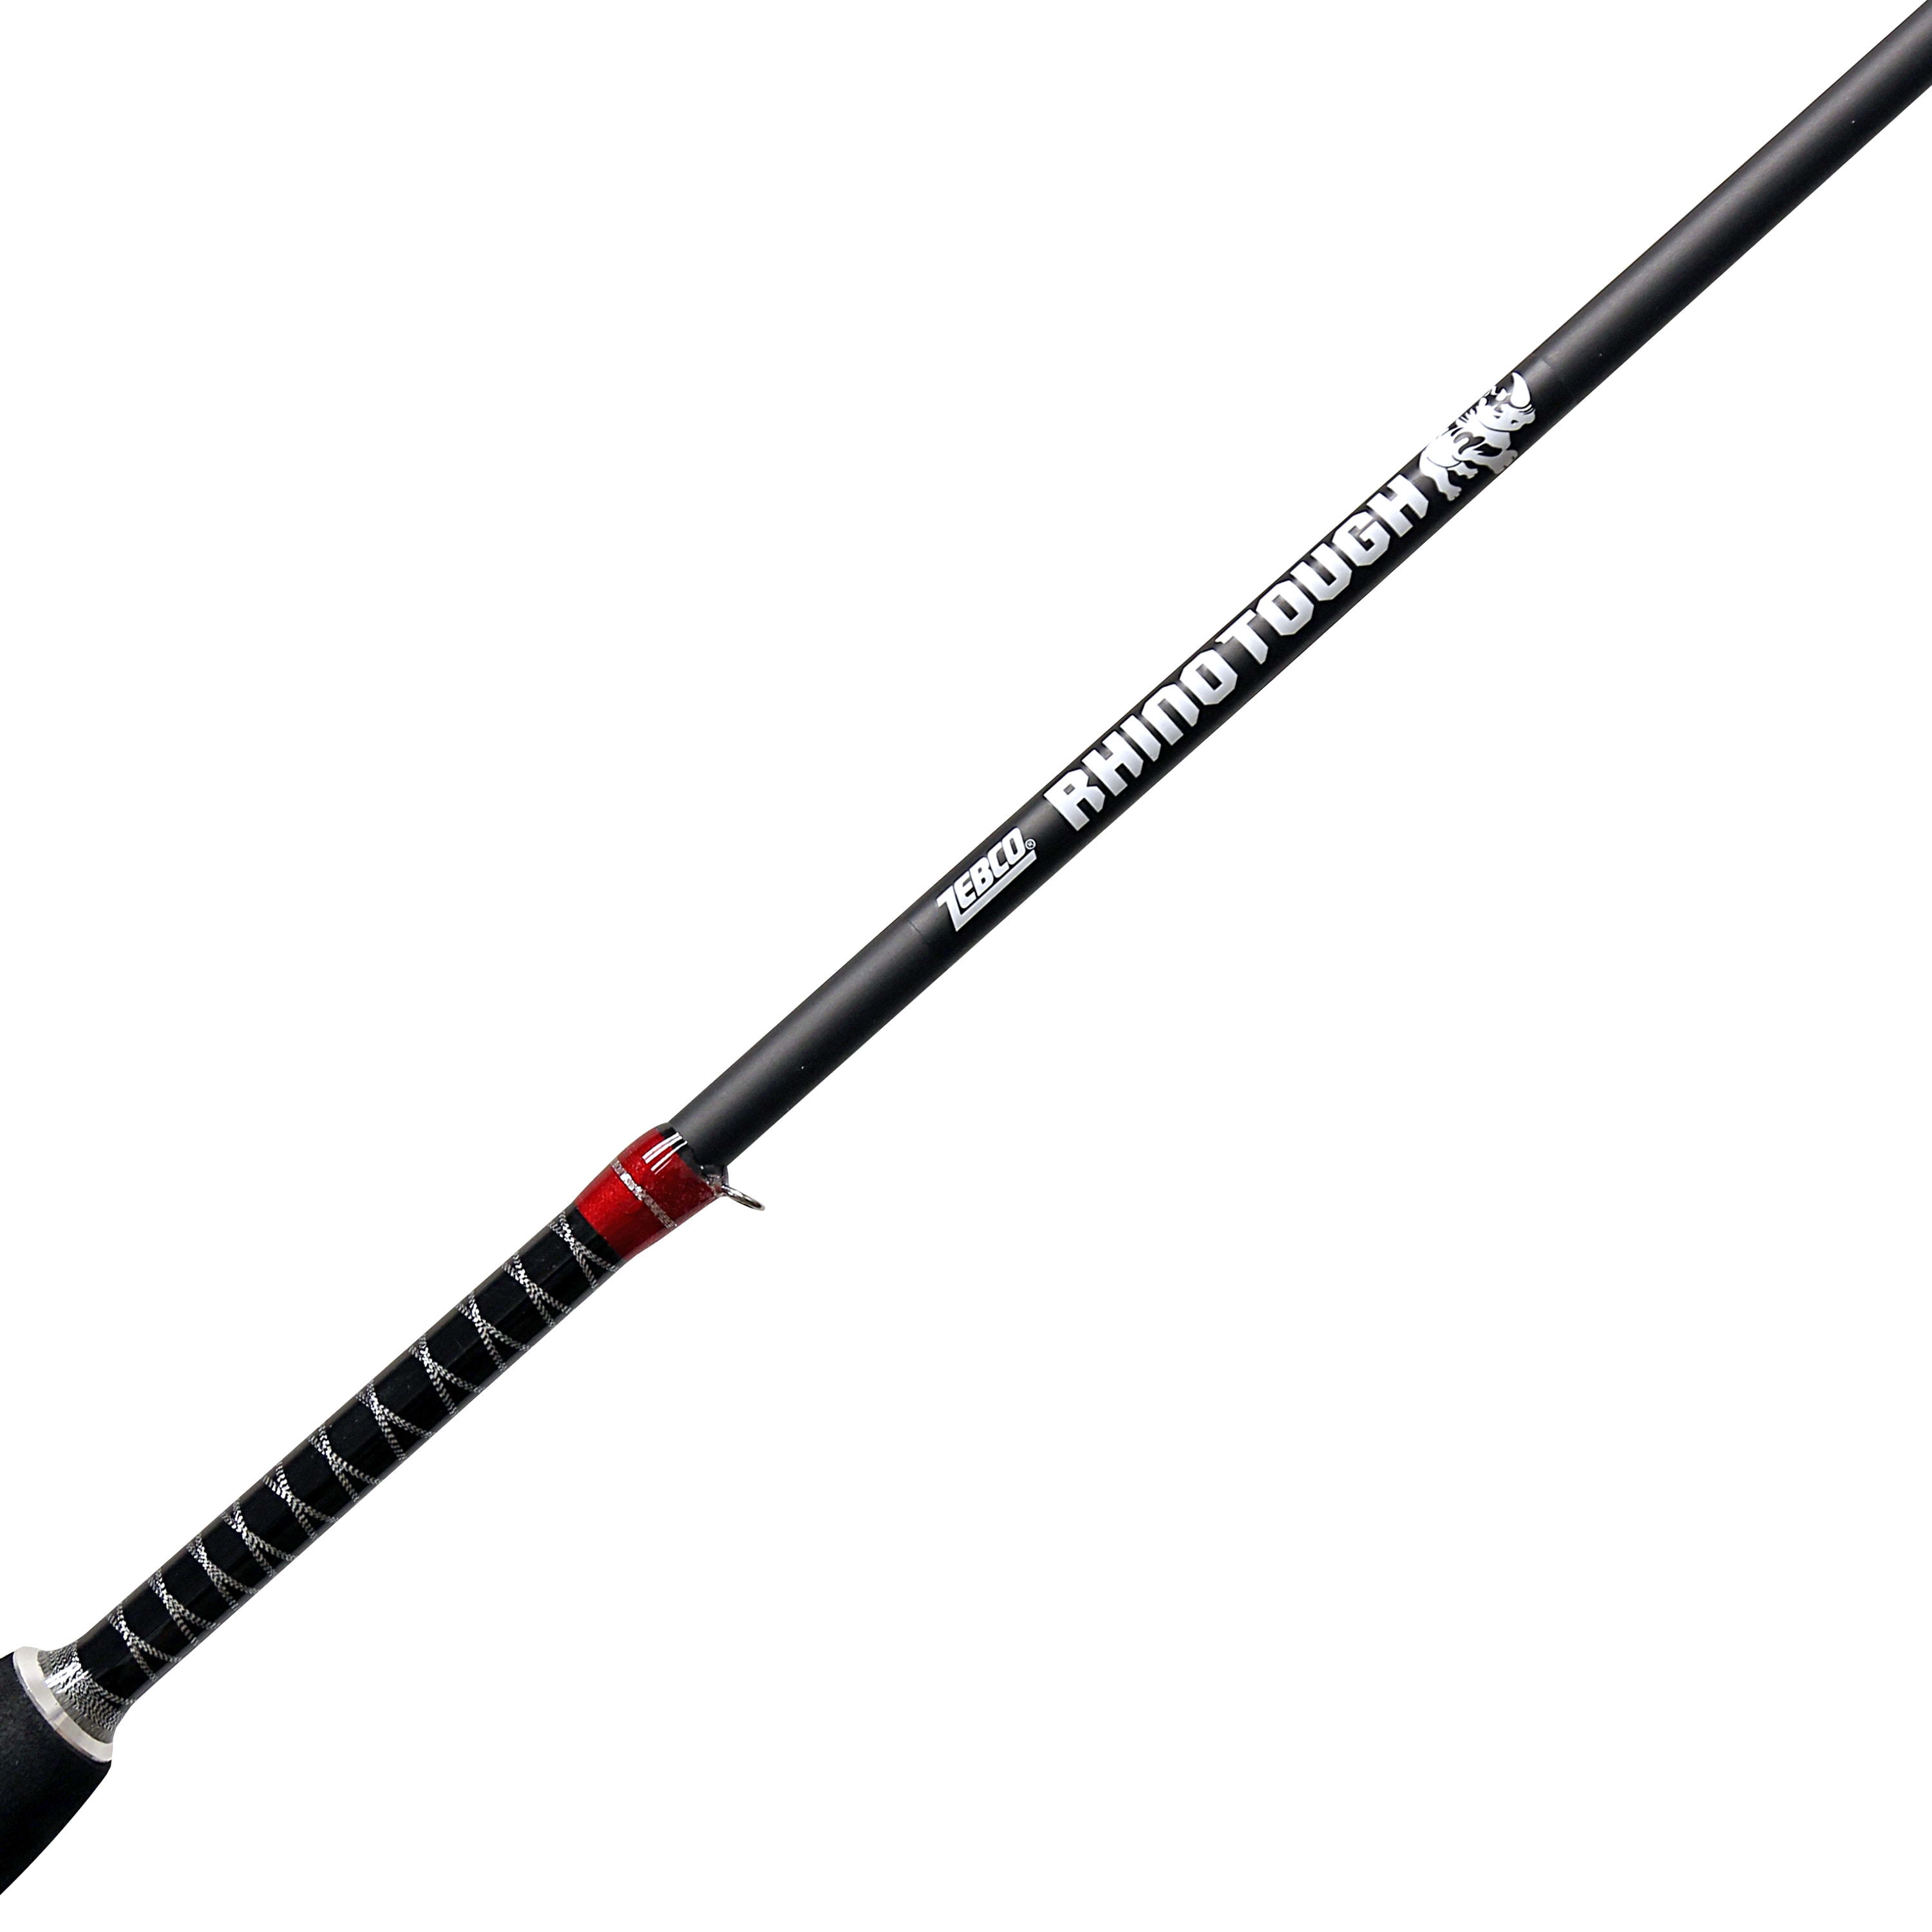 Zebco Rhino Tough Casting Fishing Rod, 5-Foot 6-Inch Fishing Pole, Black